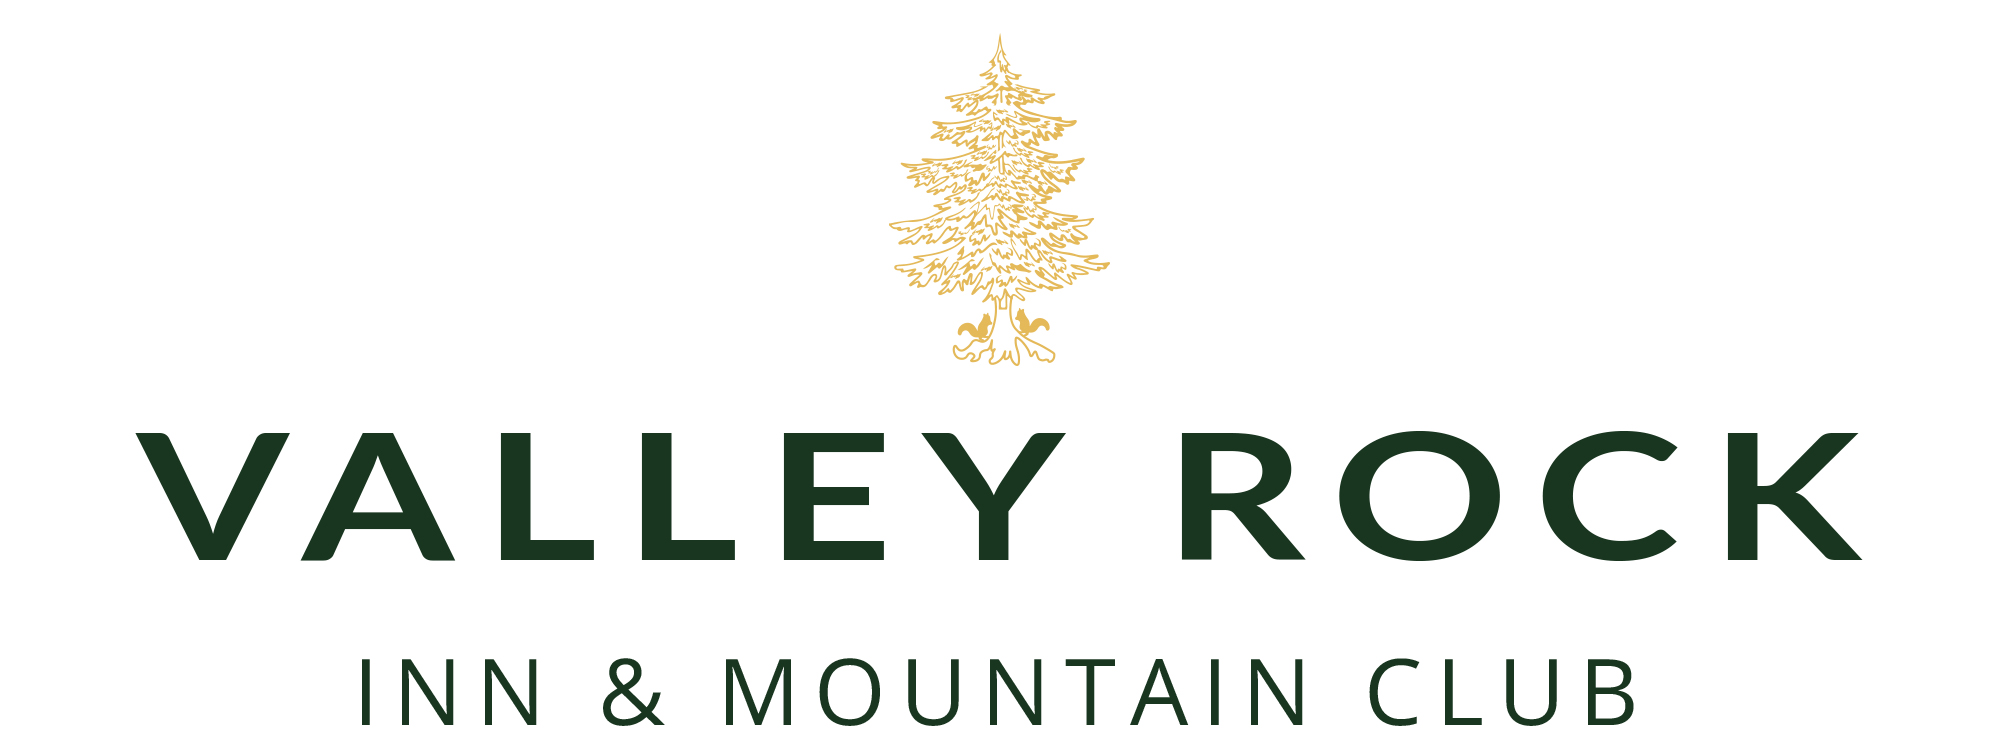 valley-rock-logo-gold